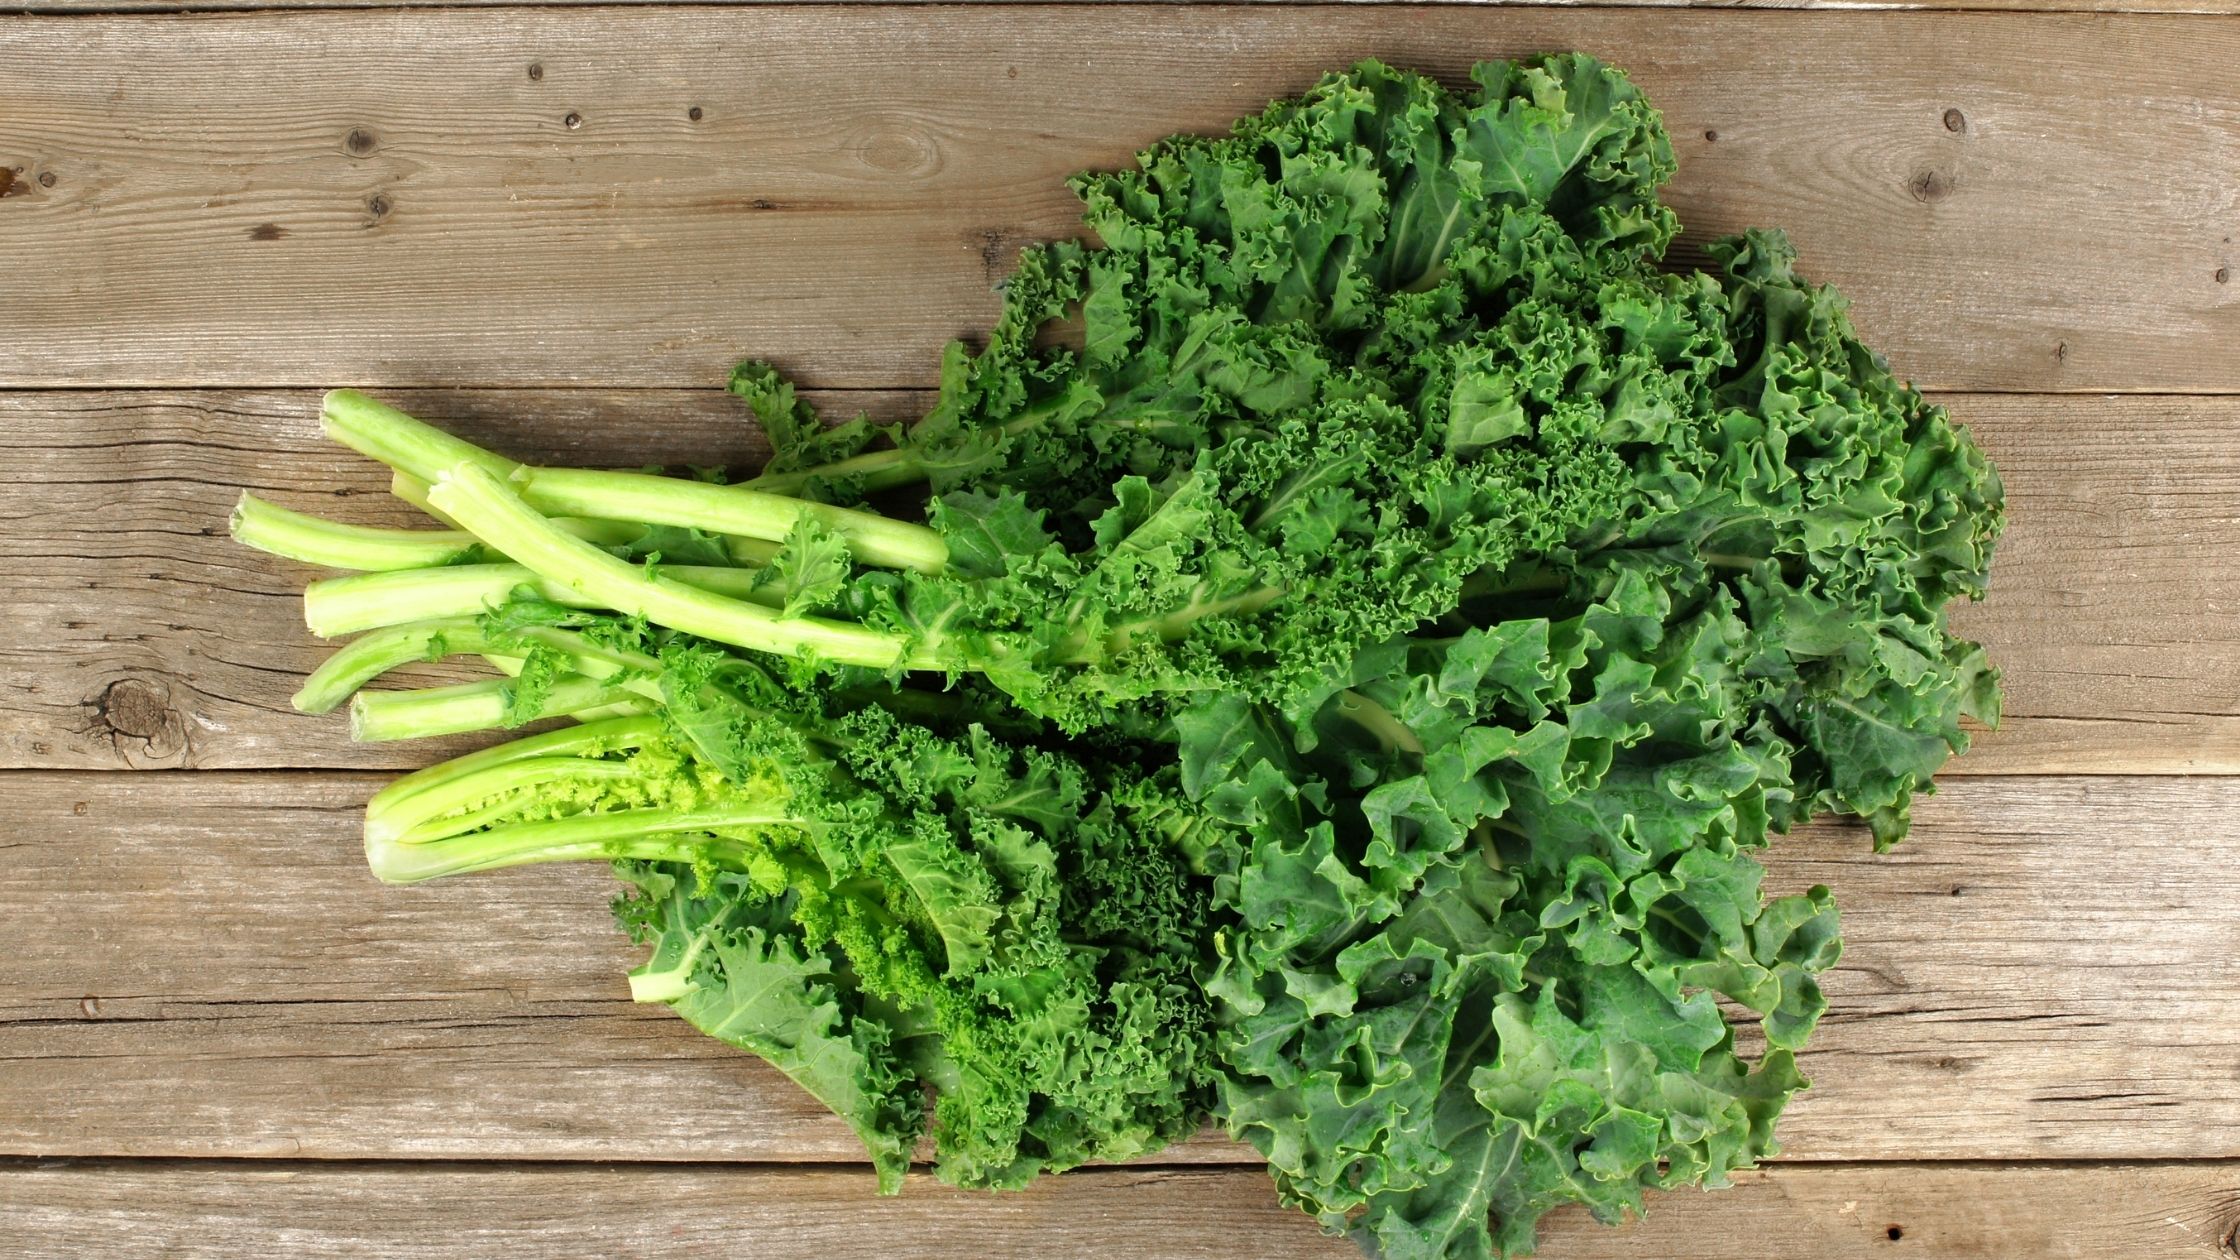 GREENS Seasoning Mix Fresh Success and Wileys, Collards Kale